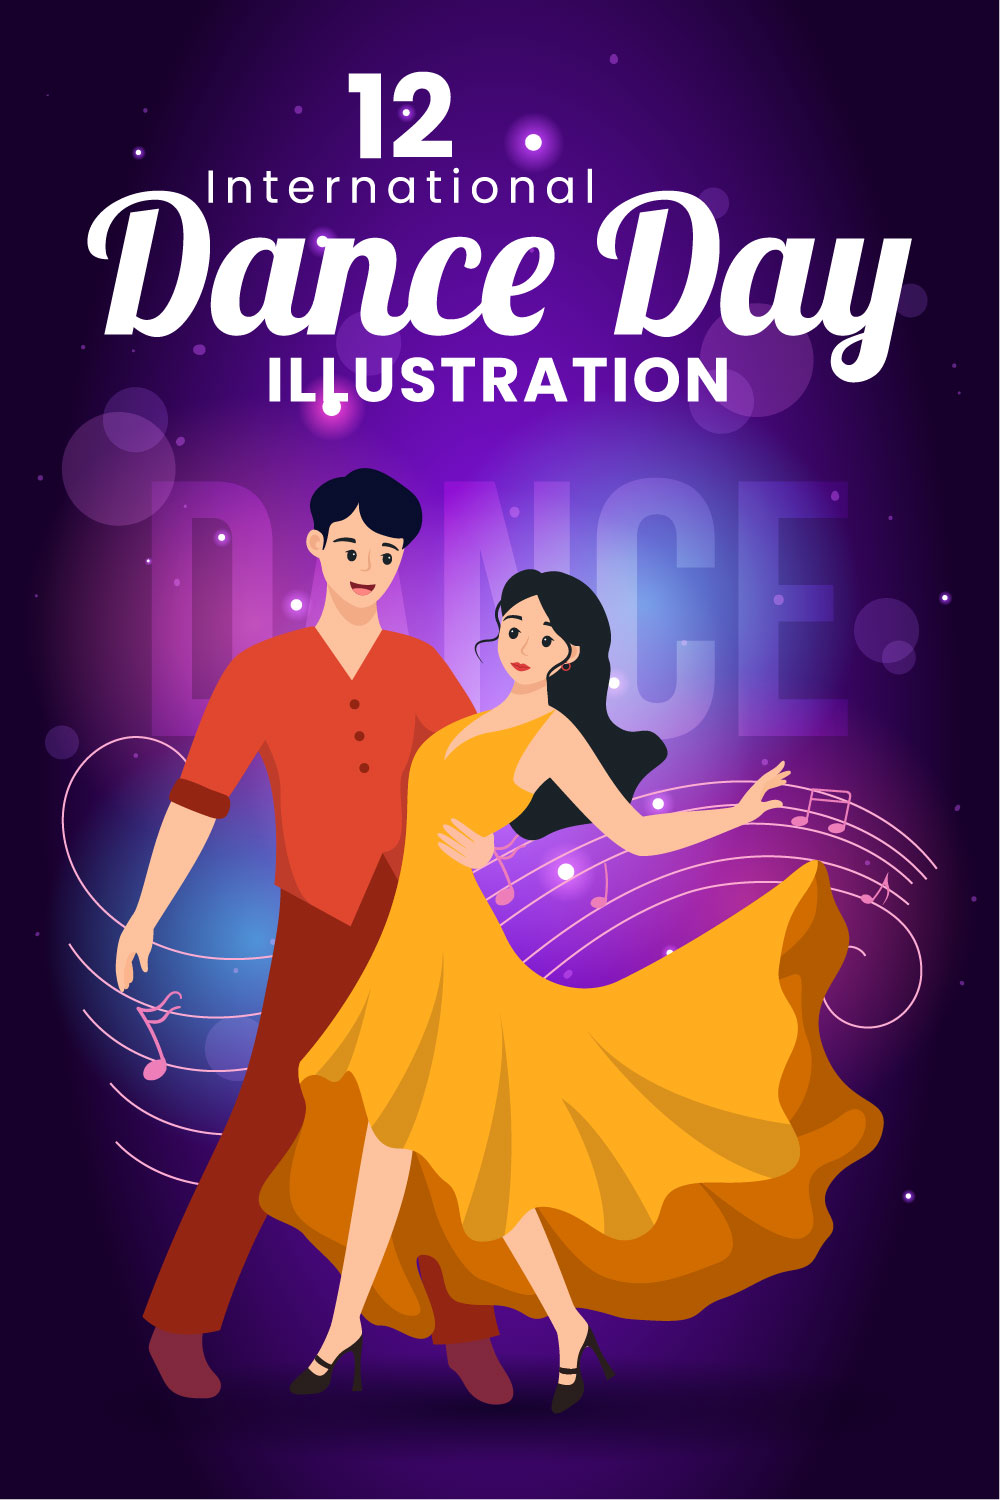 12 International Dance Day Illustration pinterest preview image.